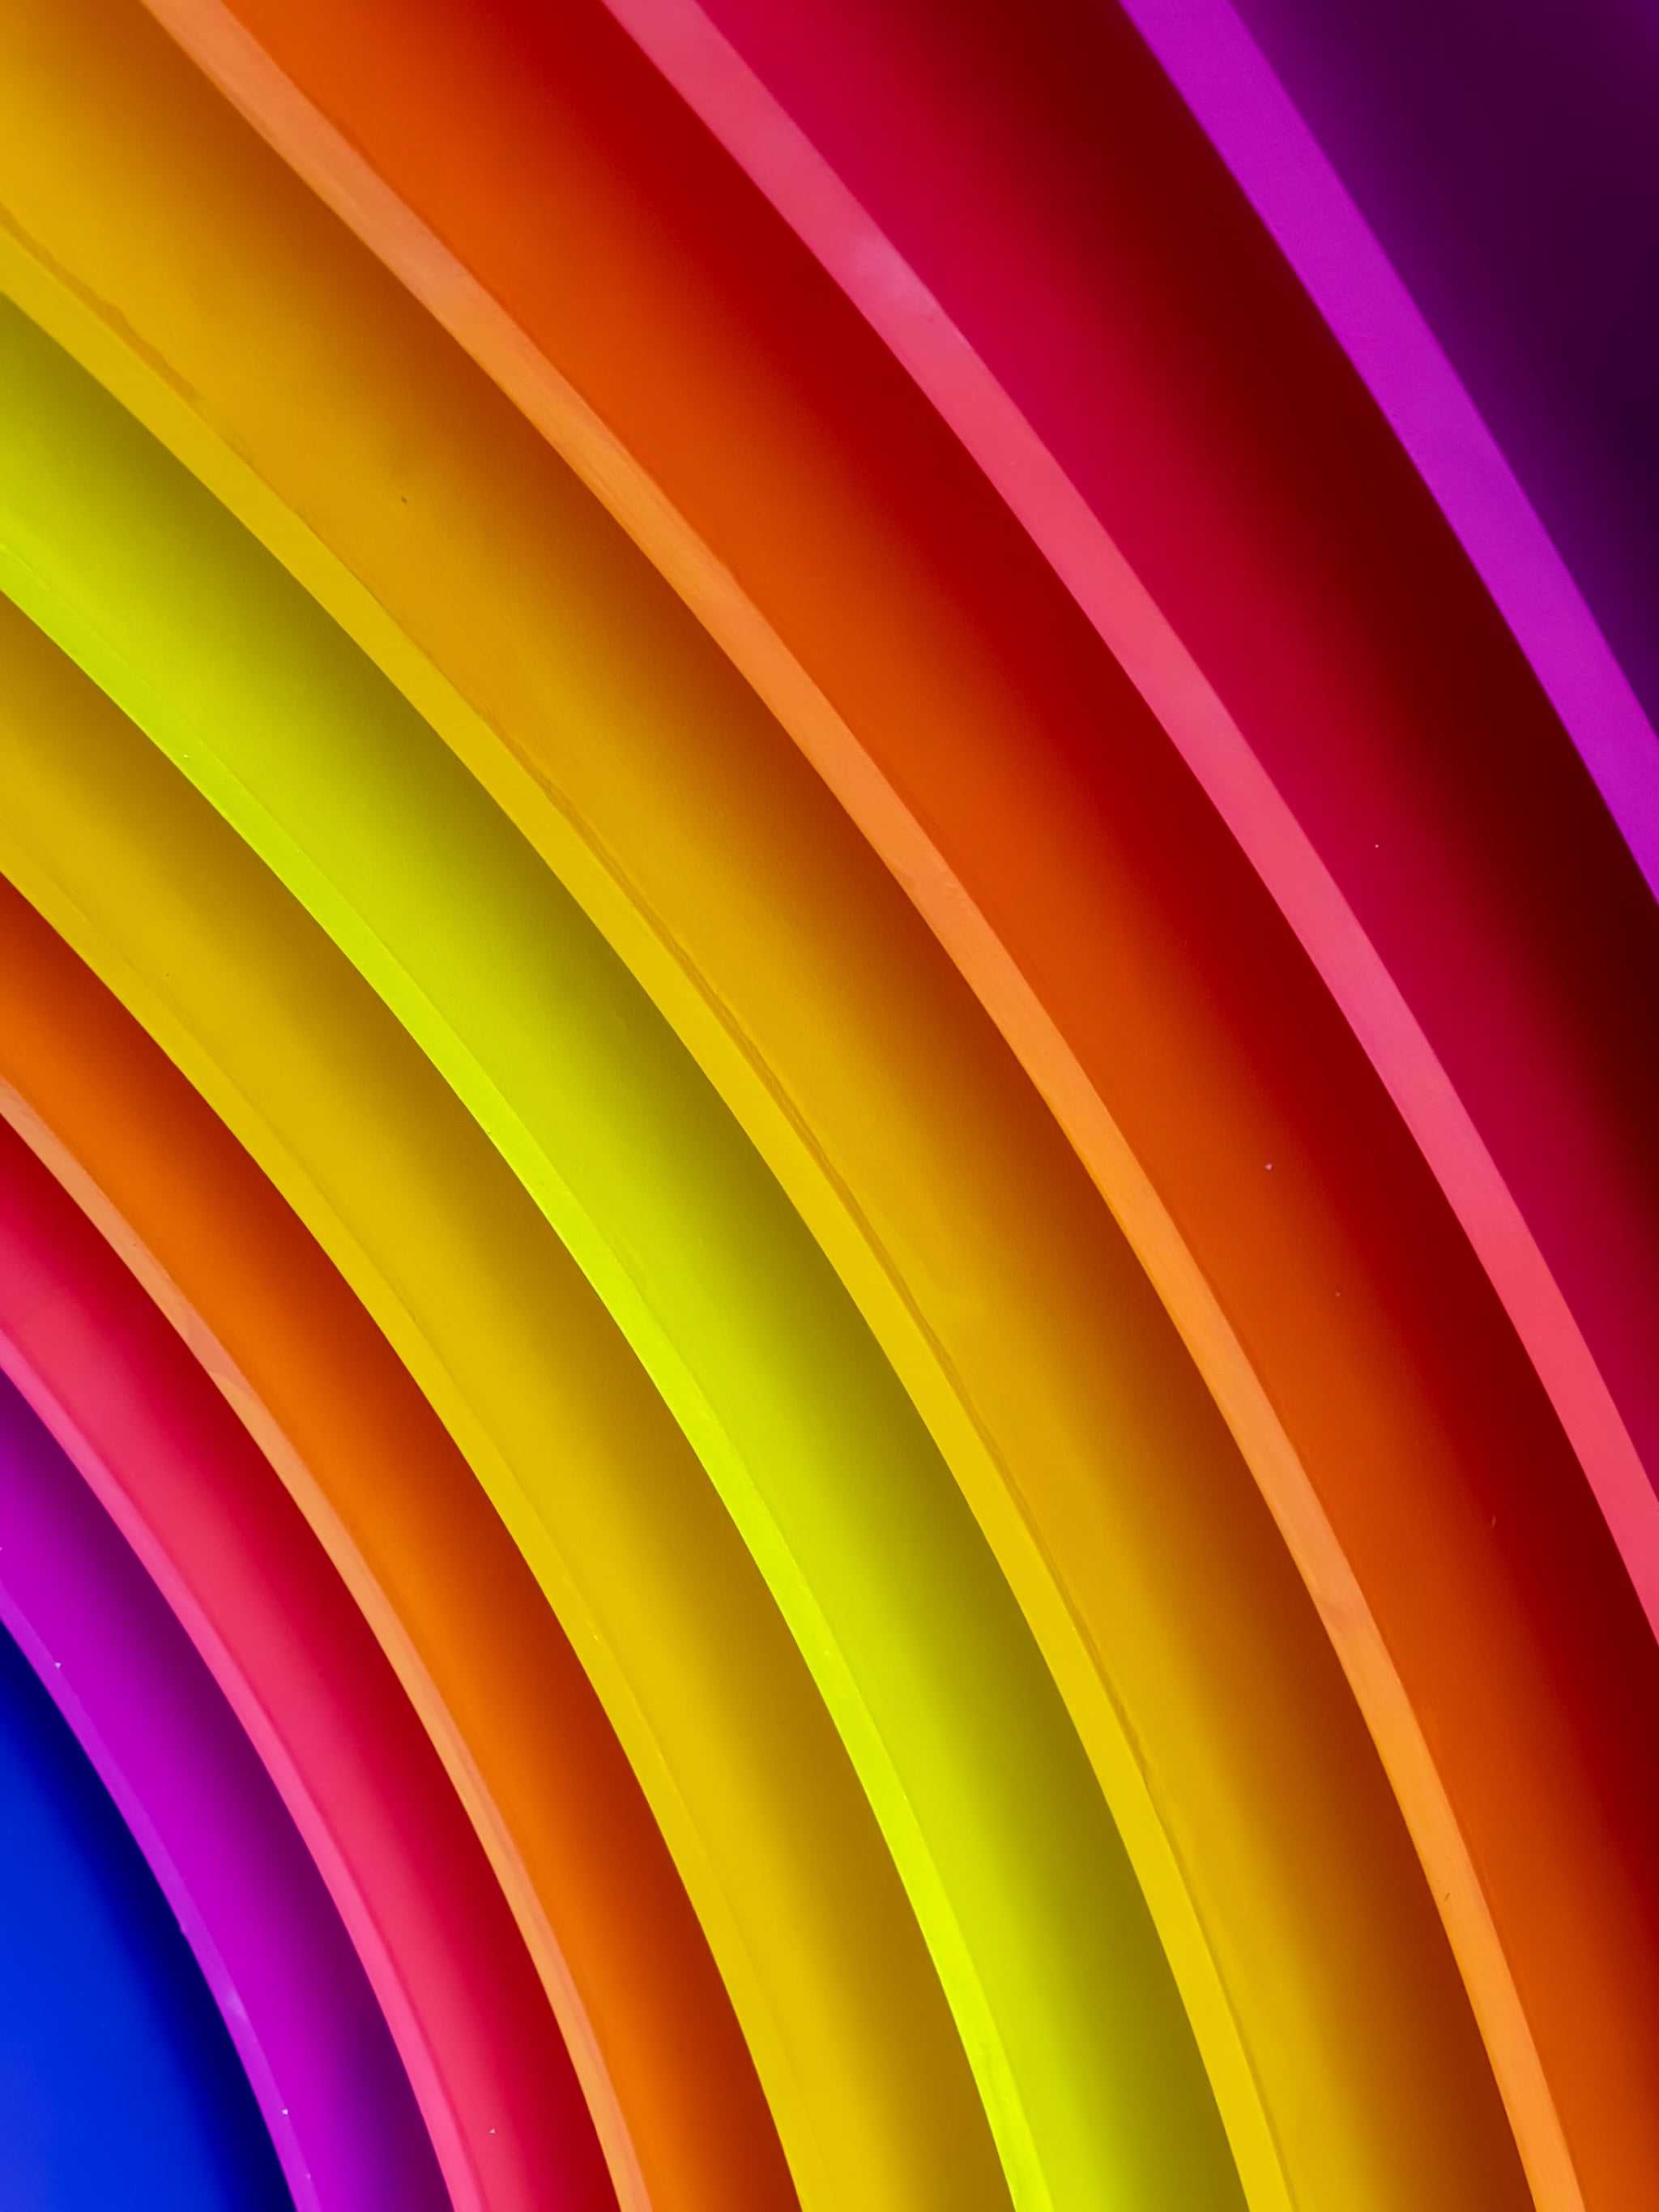 Rainbow Wallpaper 1